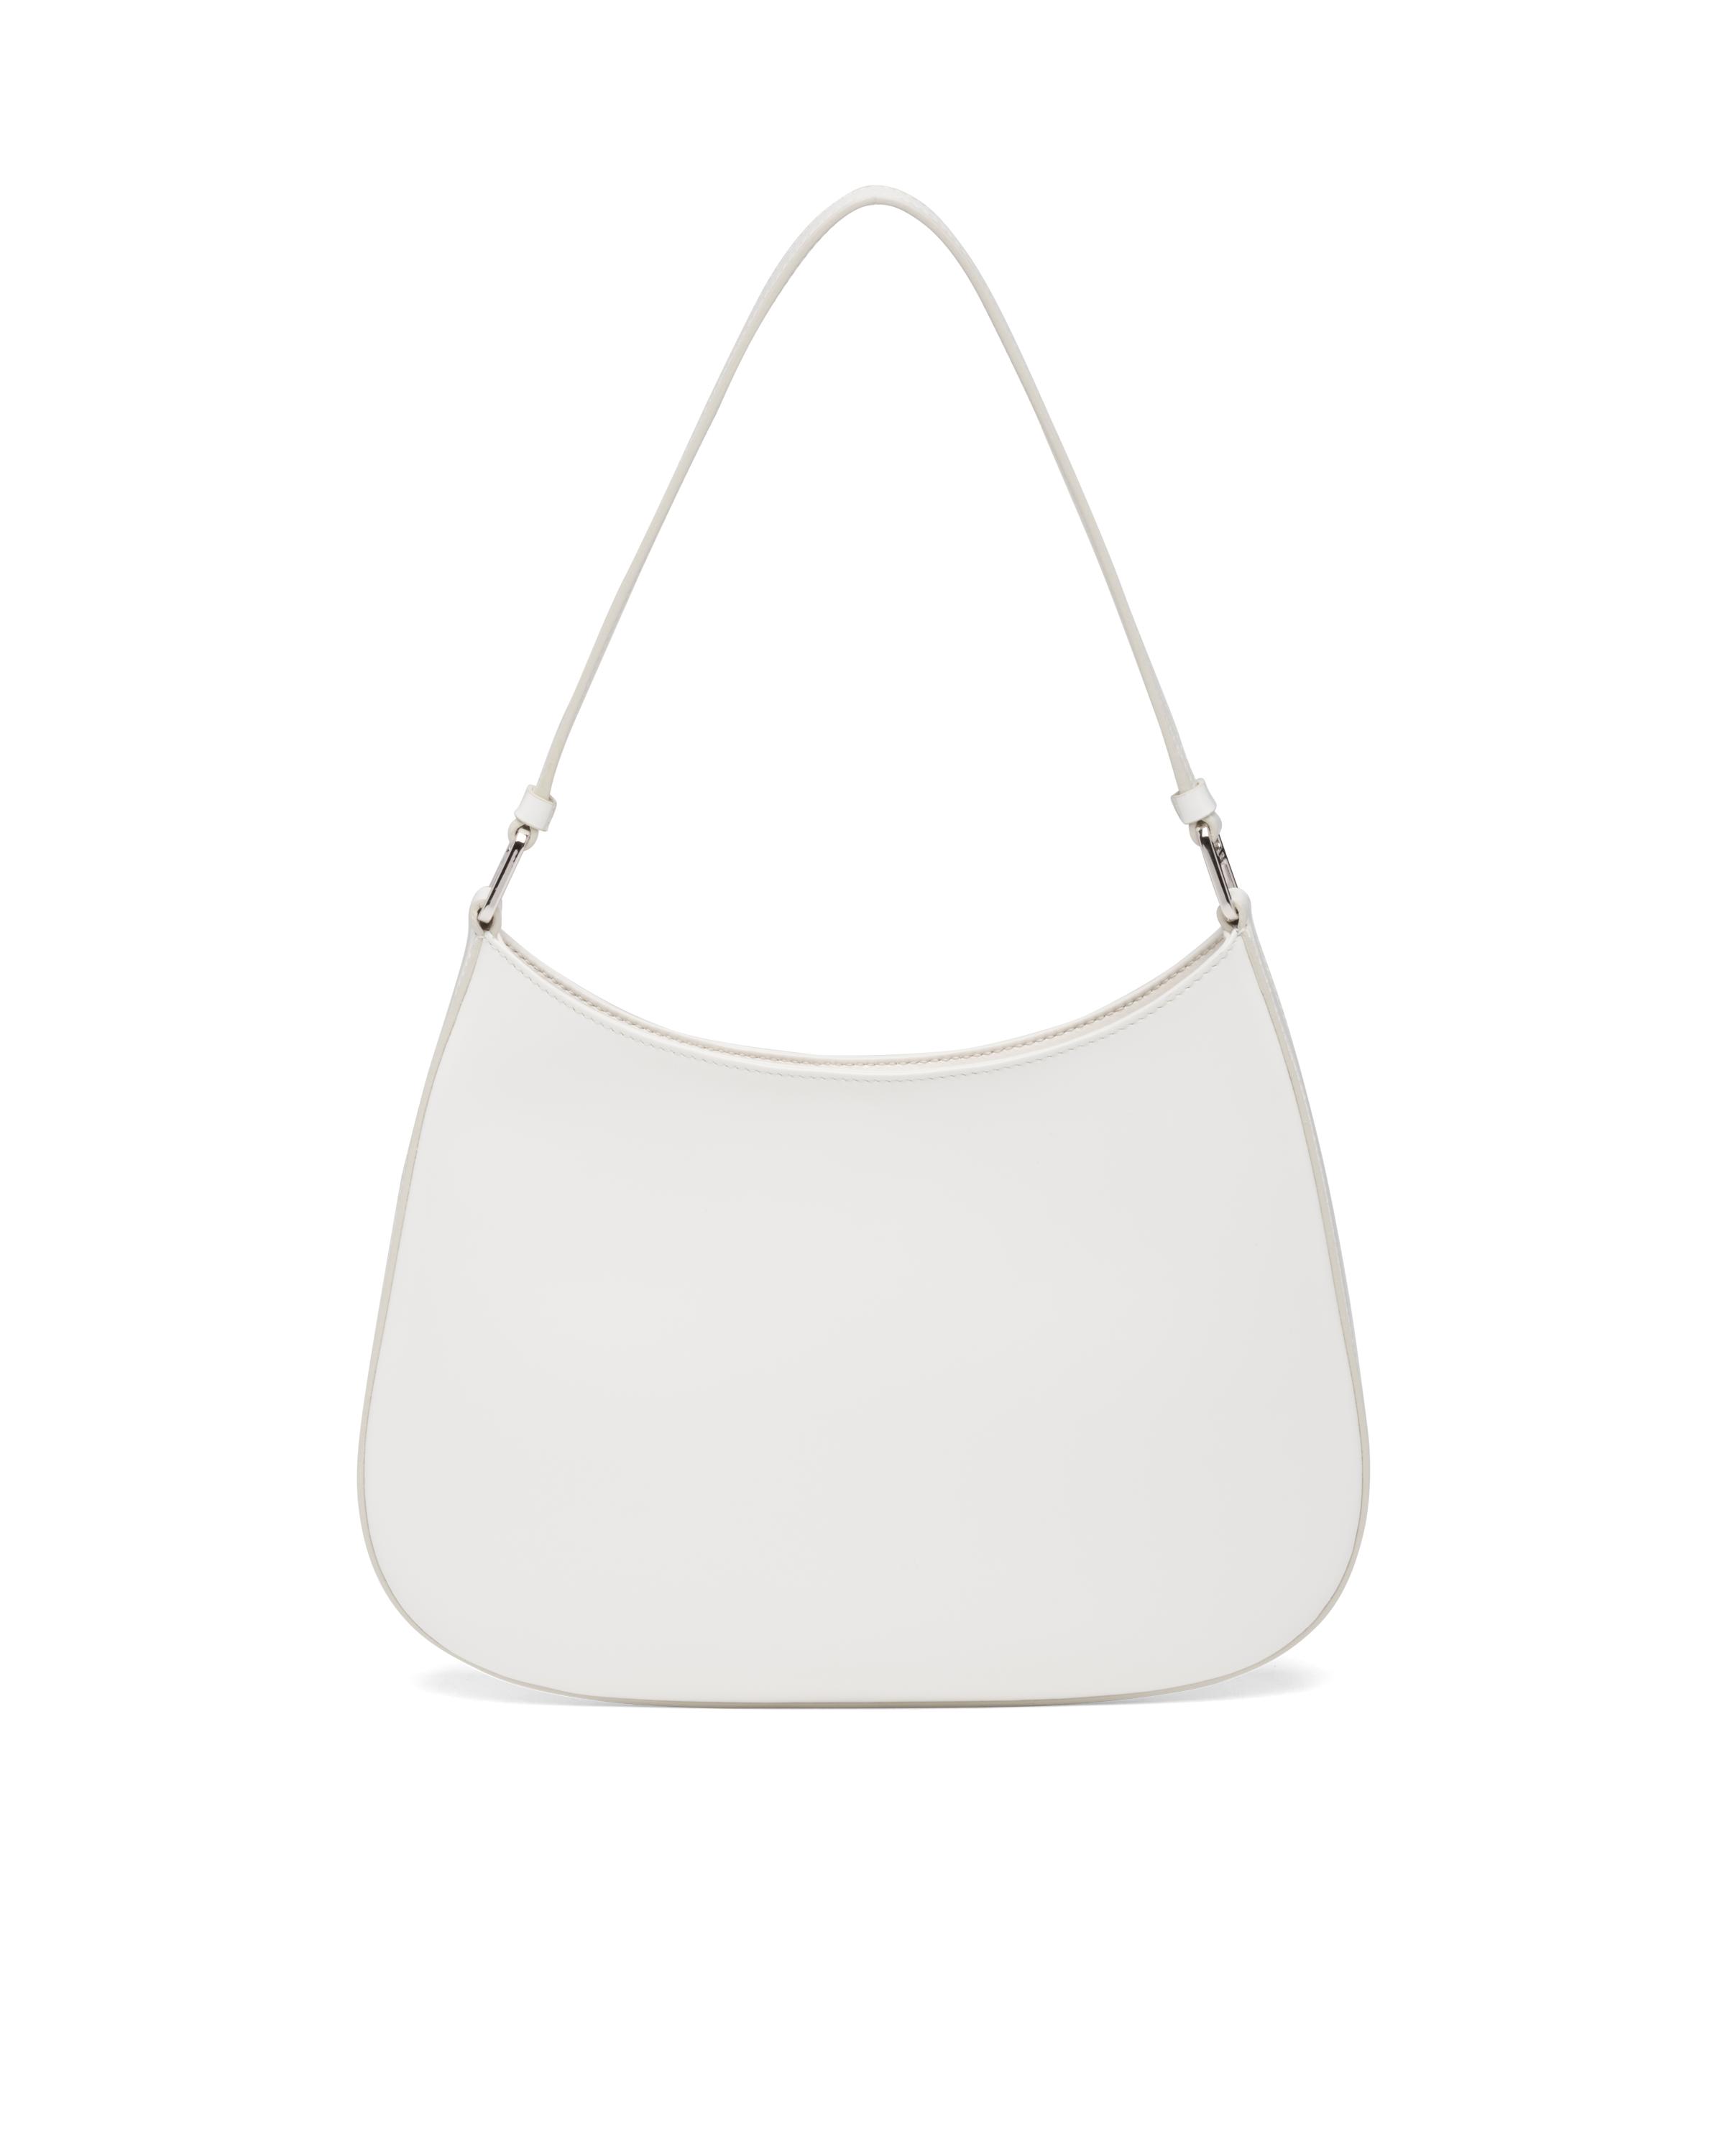 Prada Cleo Brushed Leather Shoulder Bag in White - Lyst